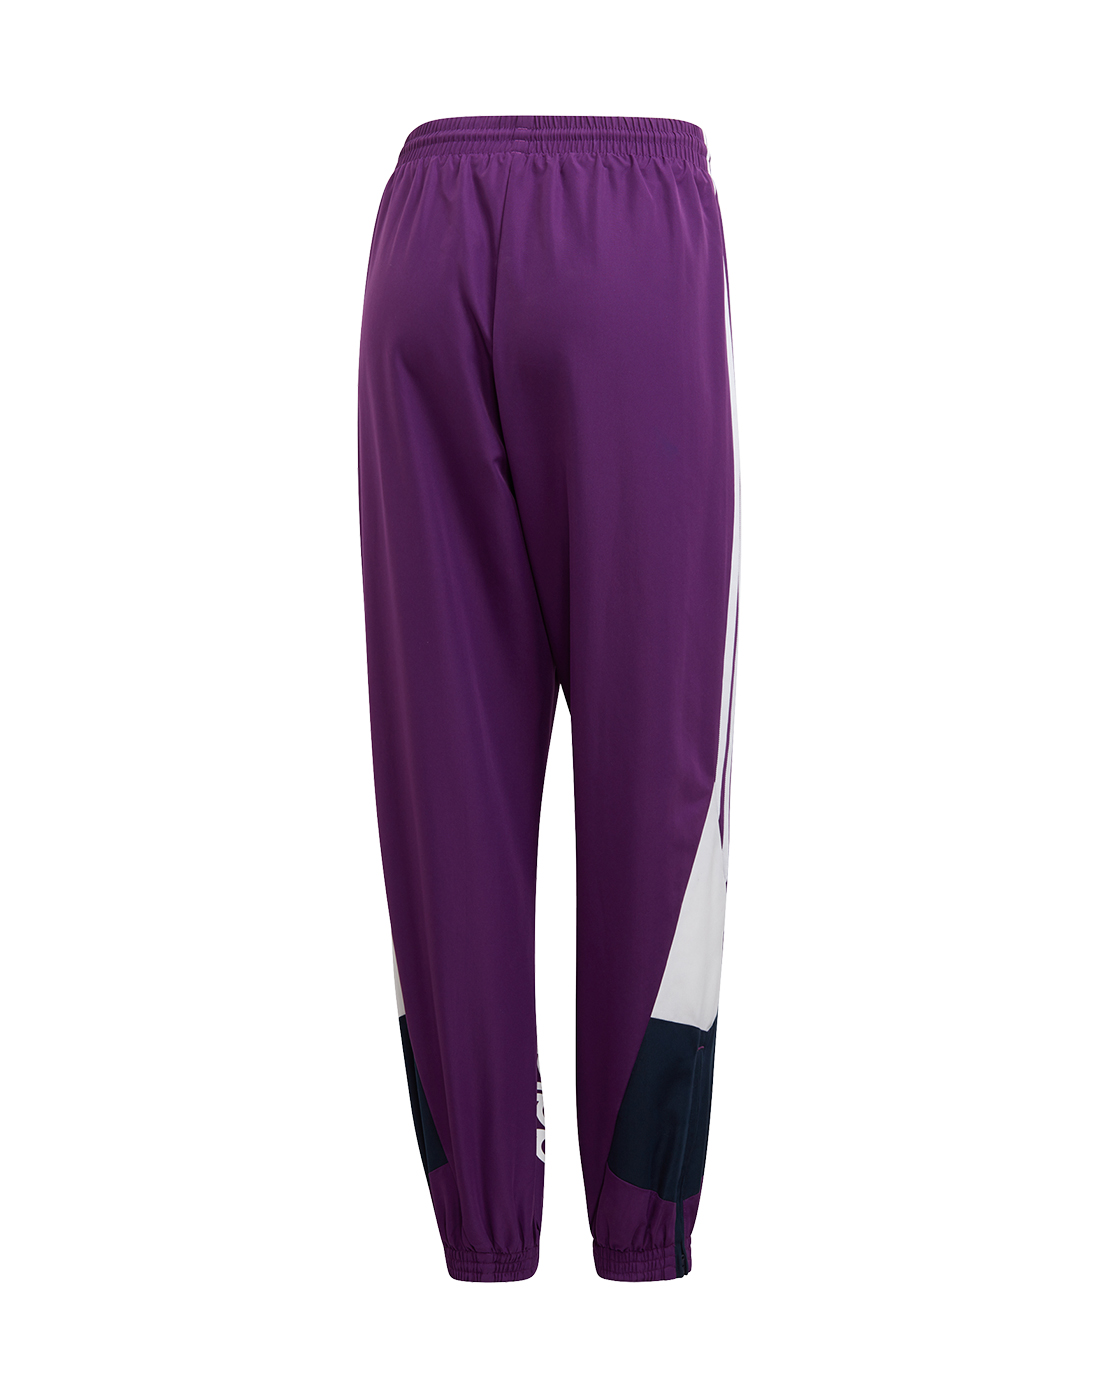 Women's Purple adidas Originals Track Pants | Life Style Sports